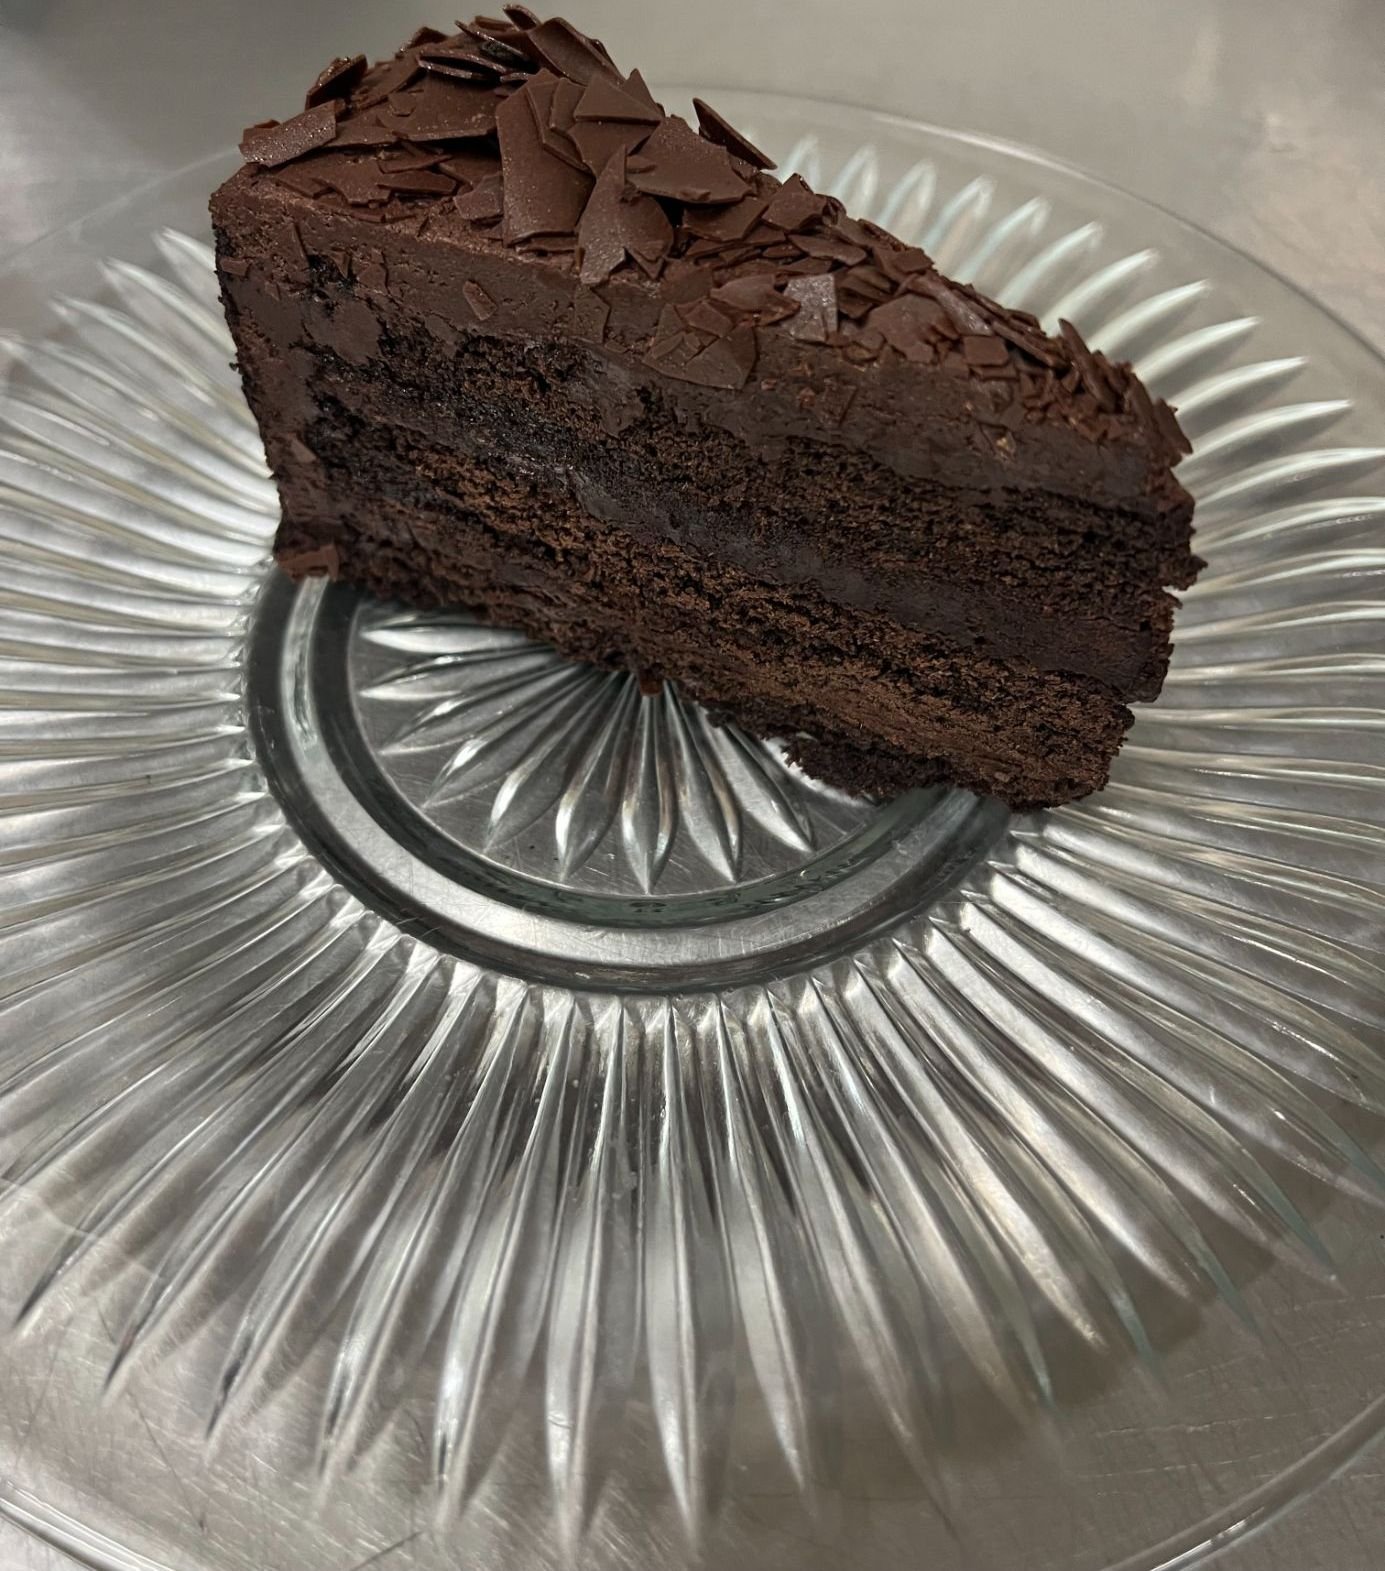 Chocolate cake img 0870